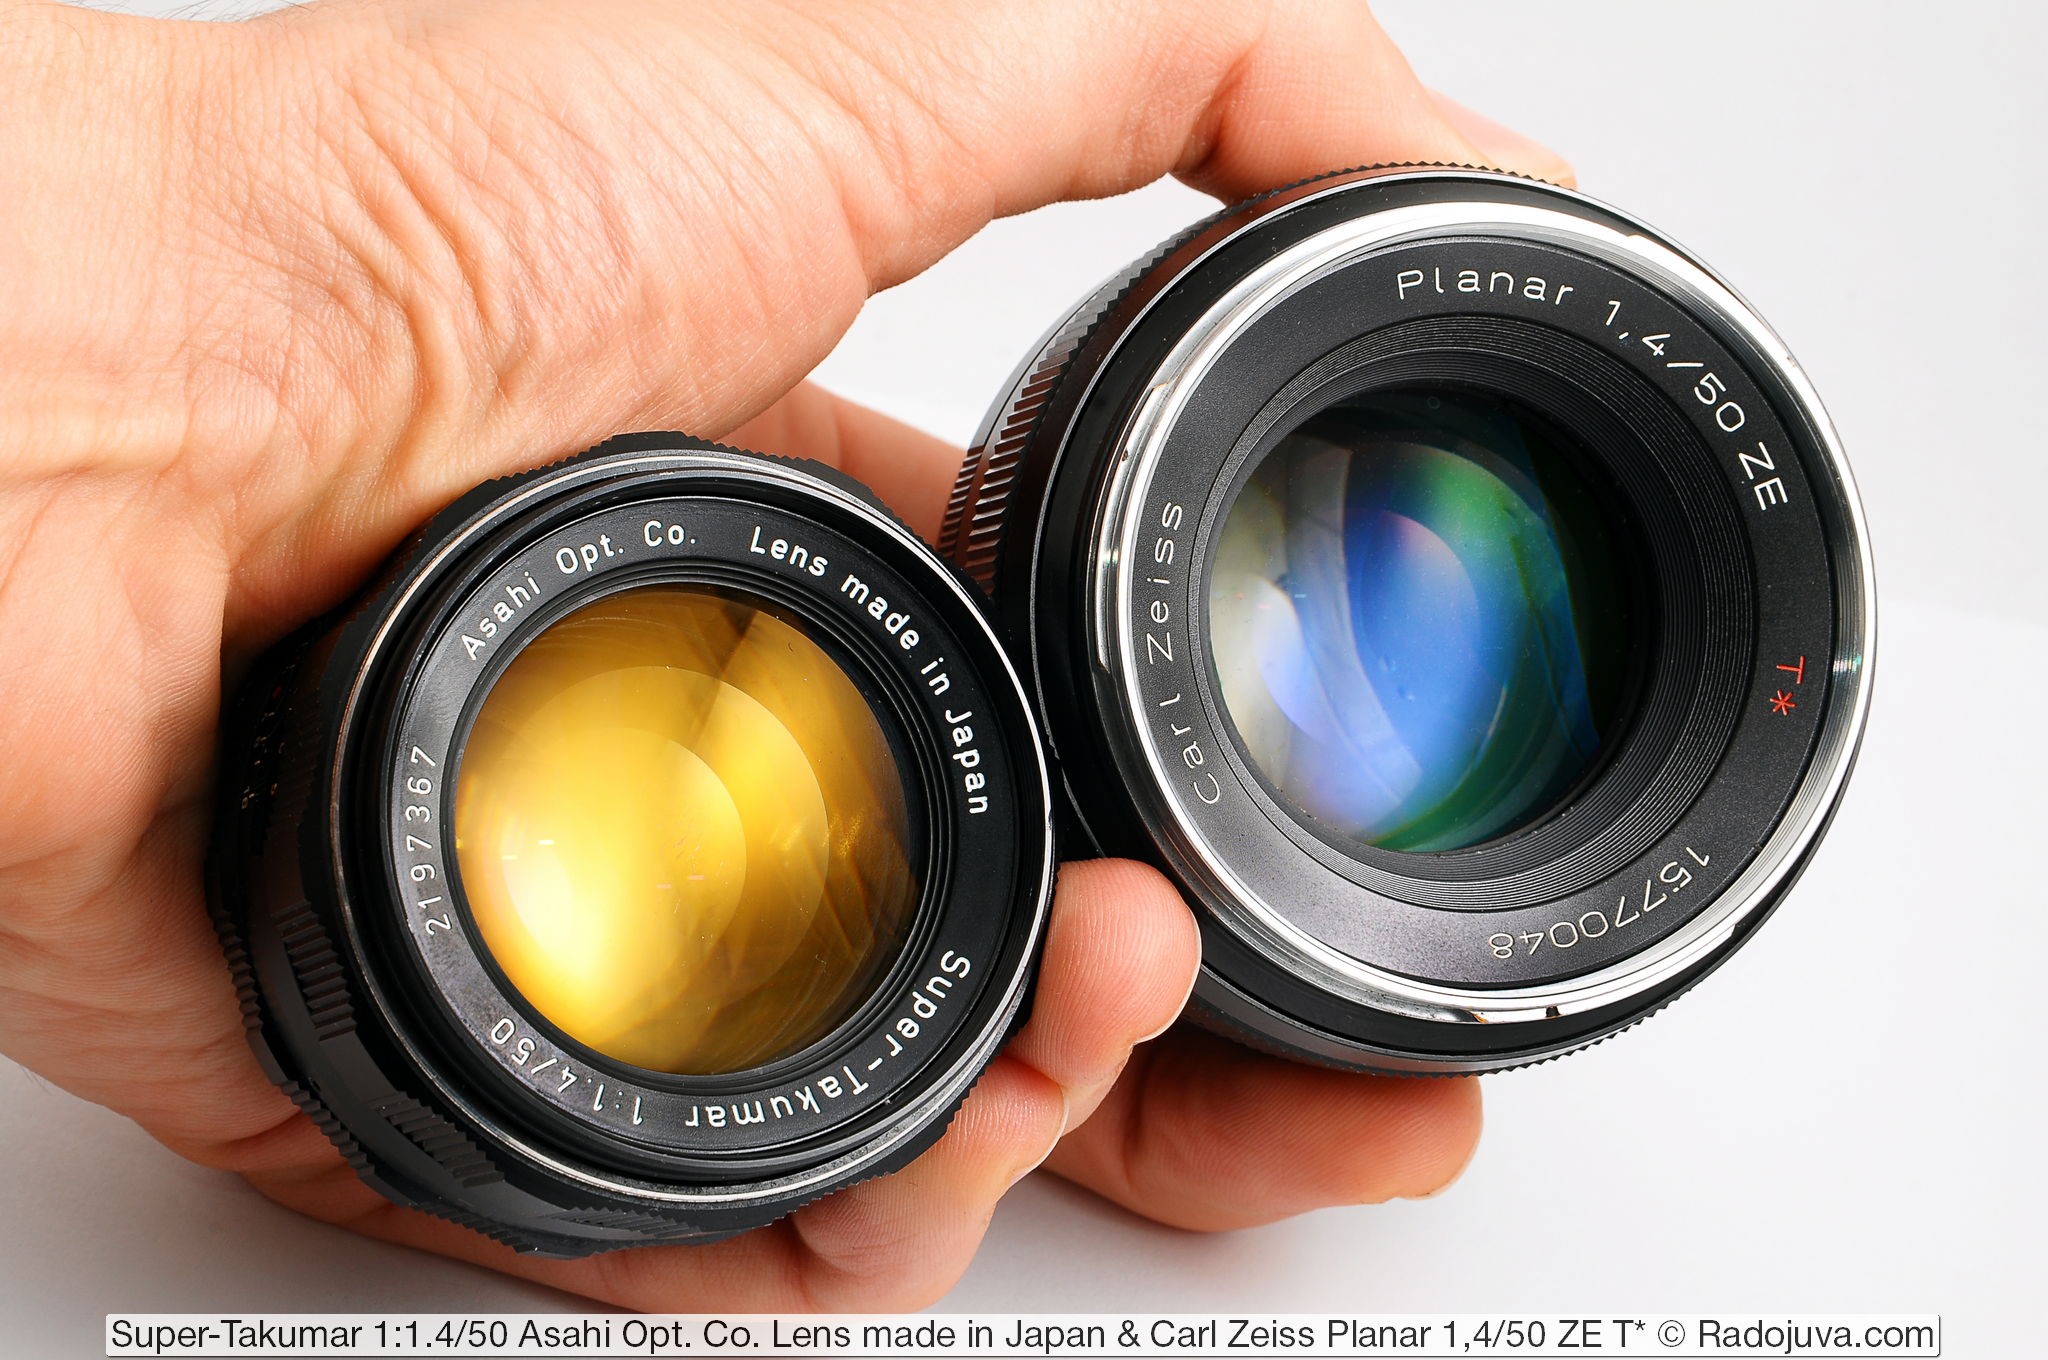 Super-Takumar 1 Lens Sizes: 1.4 / 50 Asahi Opt. Co. Lens made in Japan and Carl Zeiss Planar 1,4 / 50 ZE T *